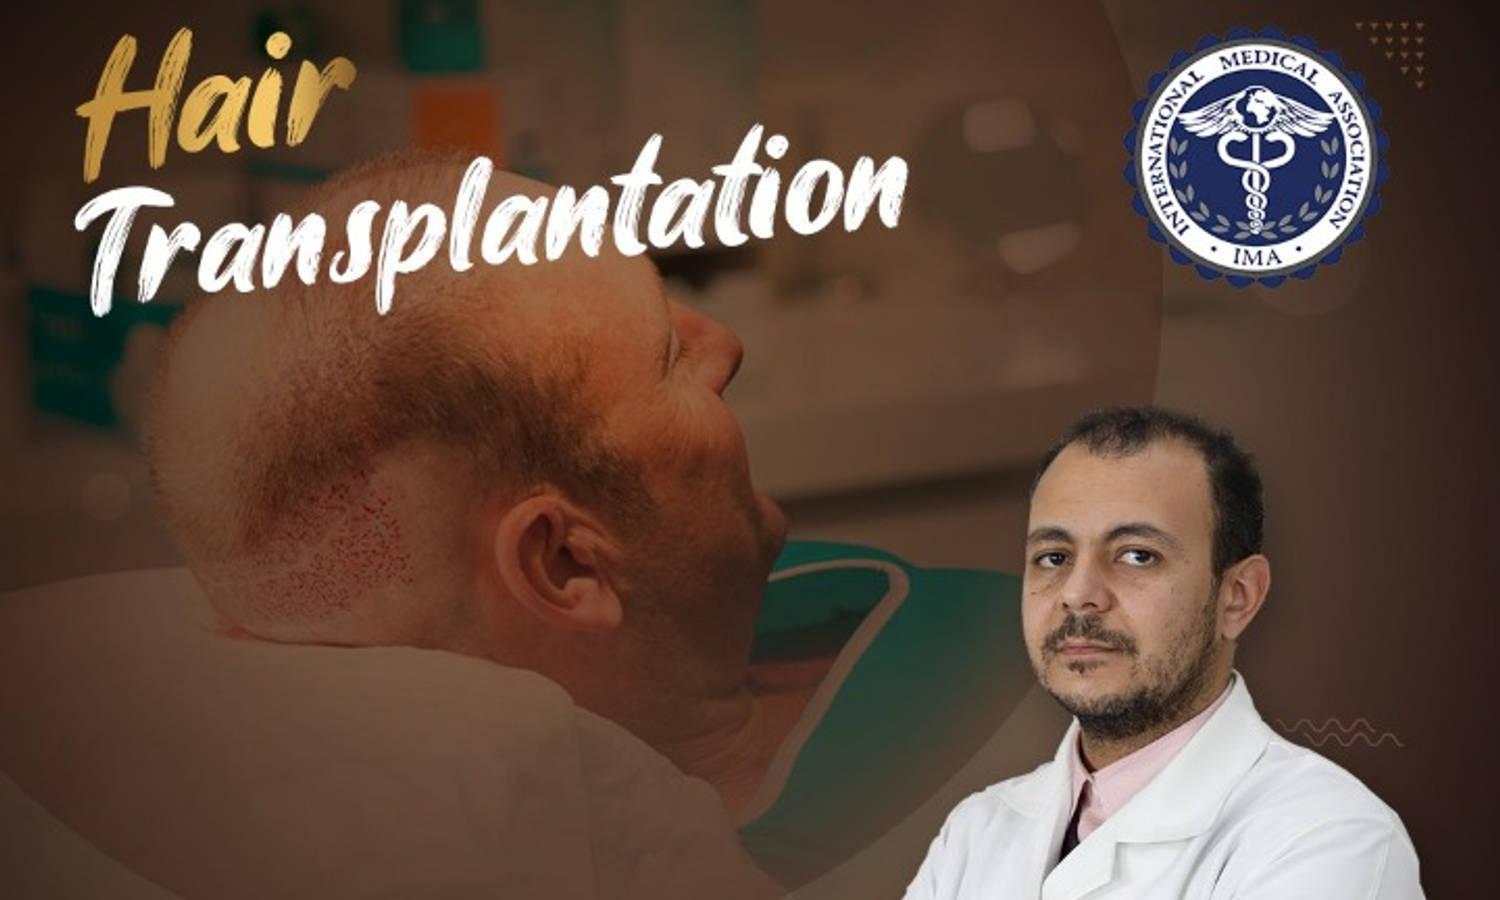 Hair Transplantation Professional Diploma